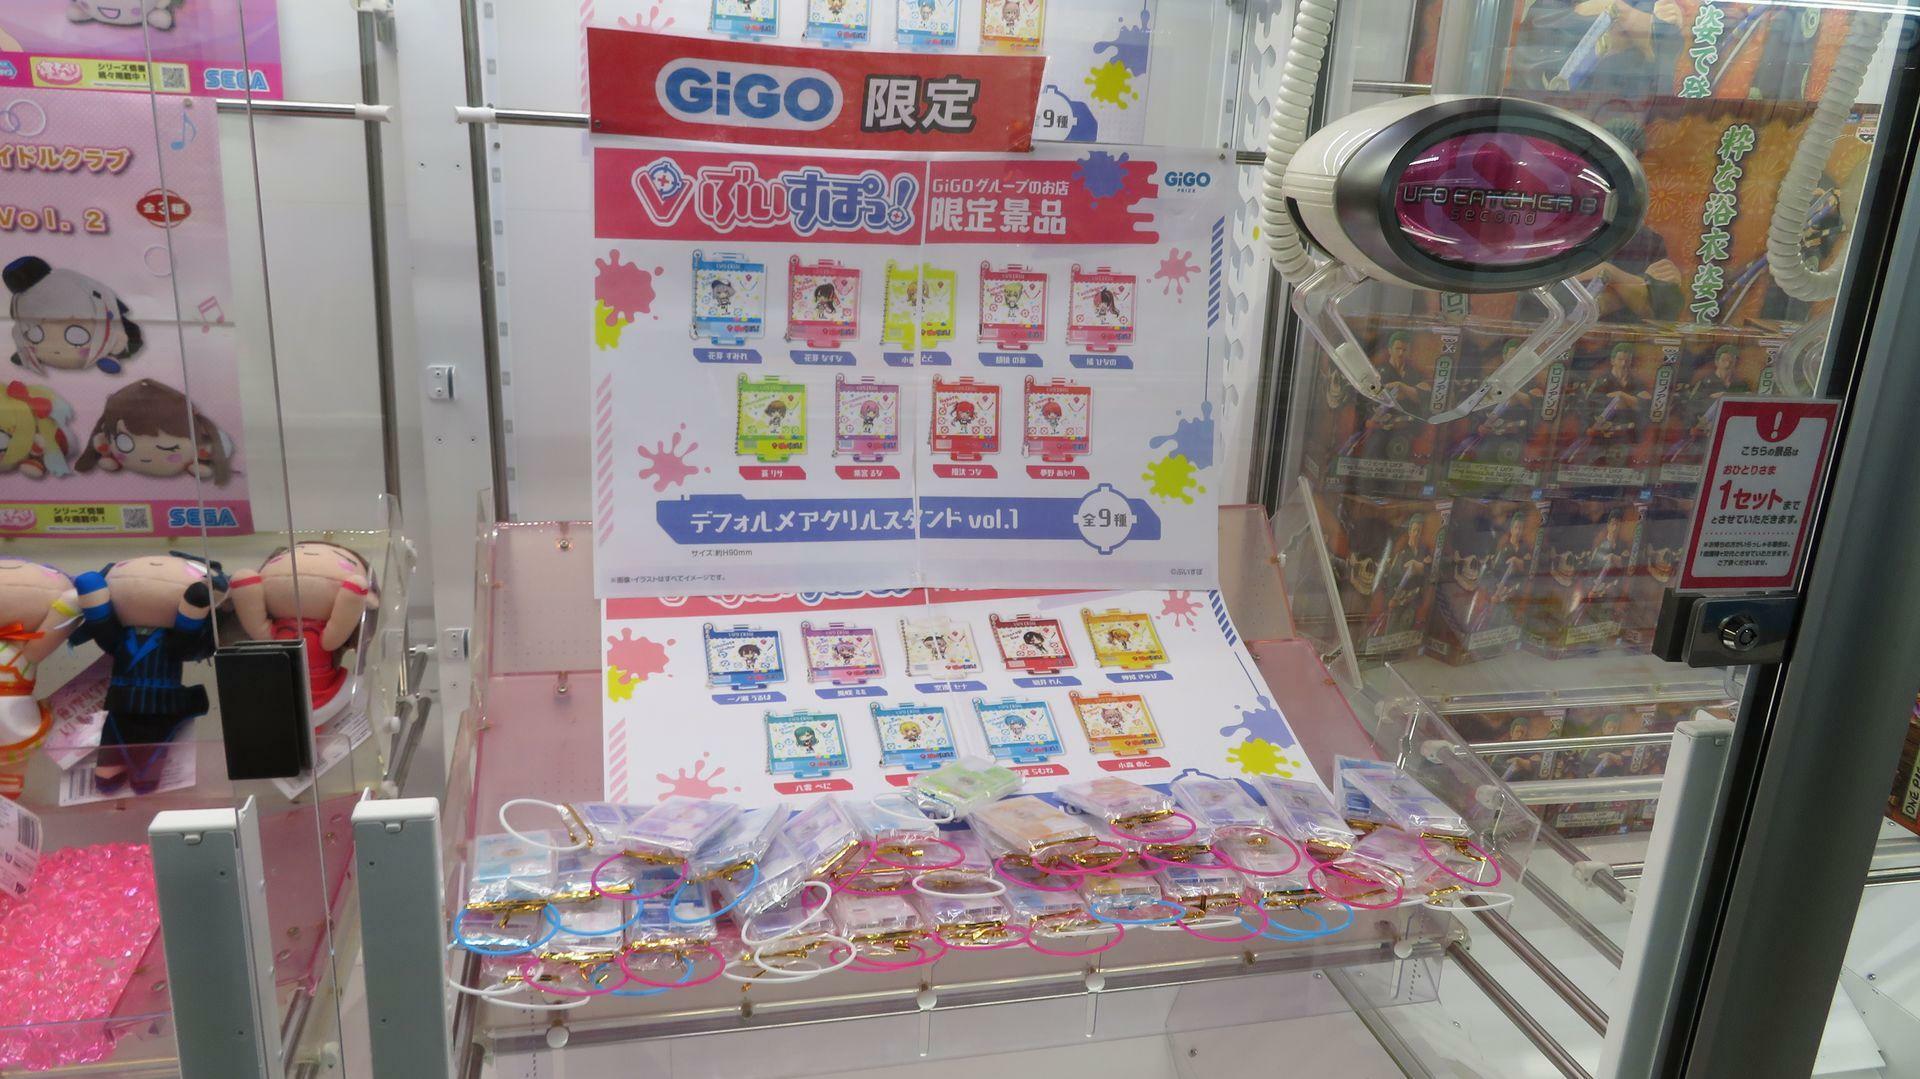 「GiGO」ブランド店舗限定の景品が導入されたプライズゲーム